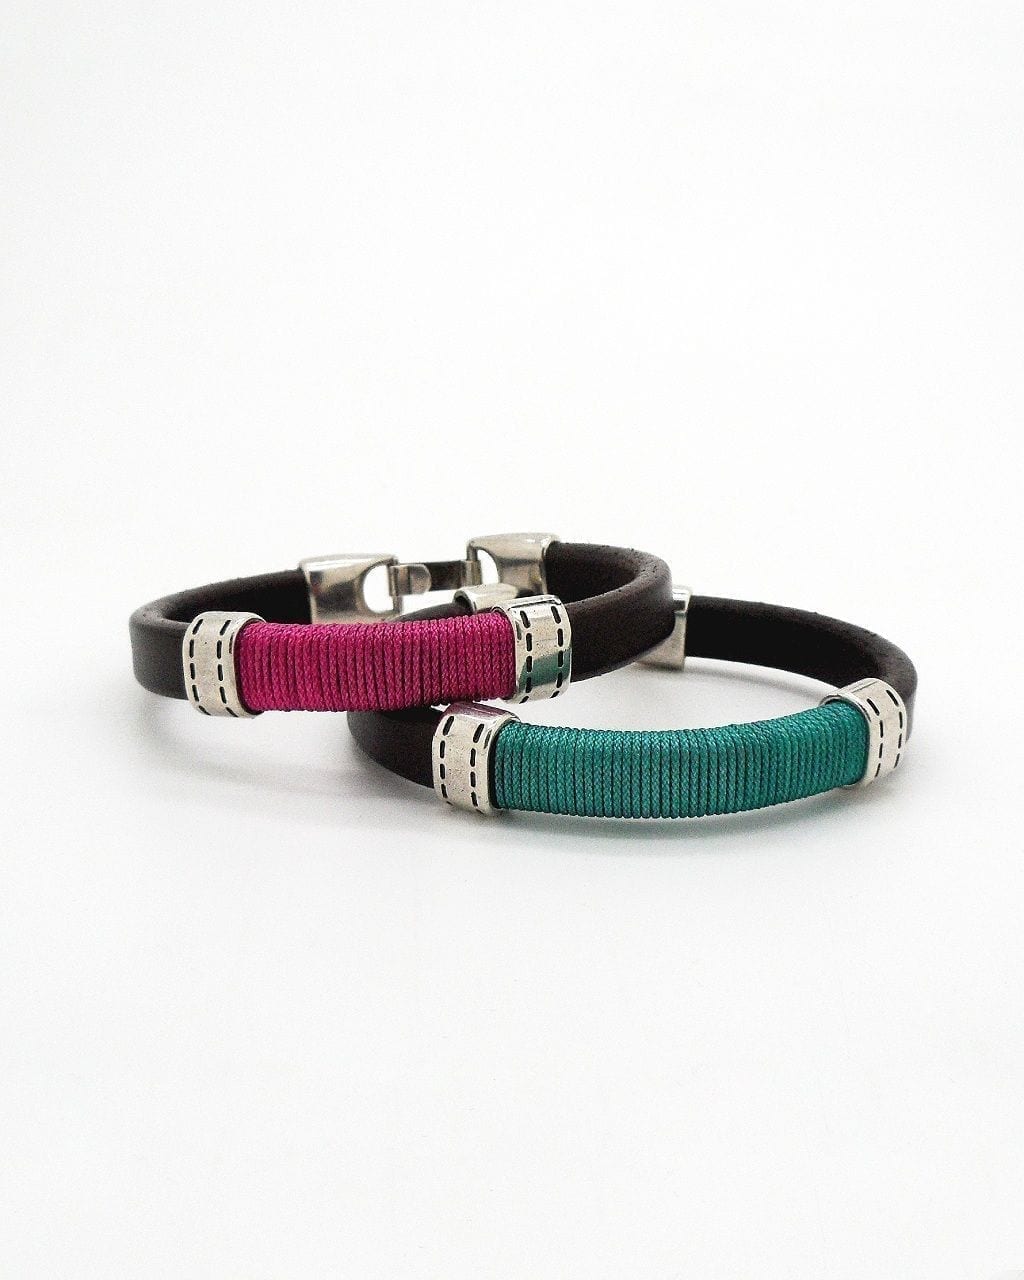 Shop Dries Van Noten Street Style Bi-color Chain Bracelets by TrendShop84 |  BUYMA